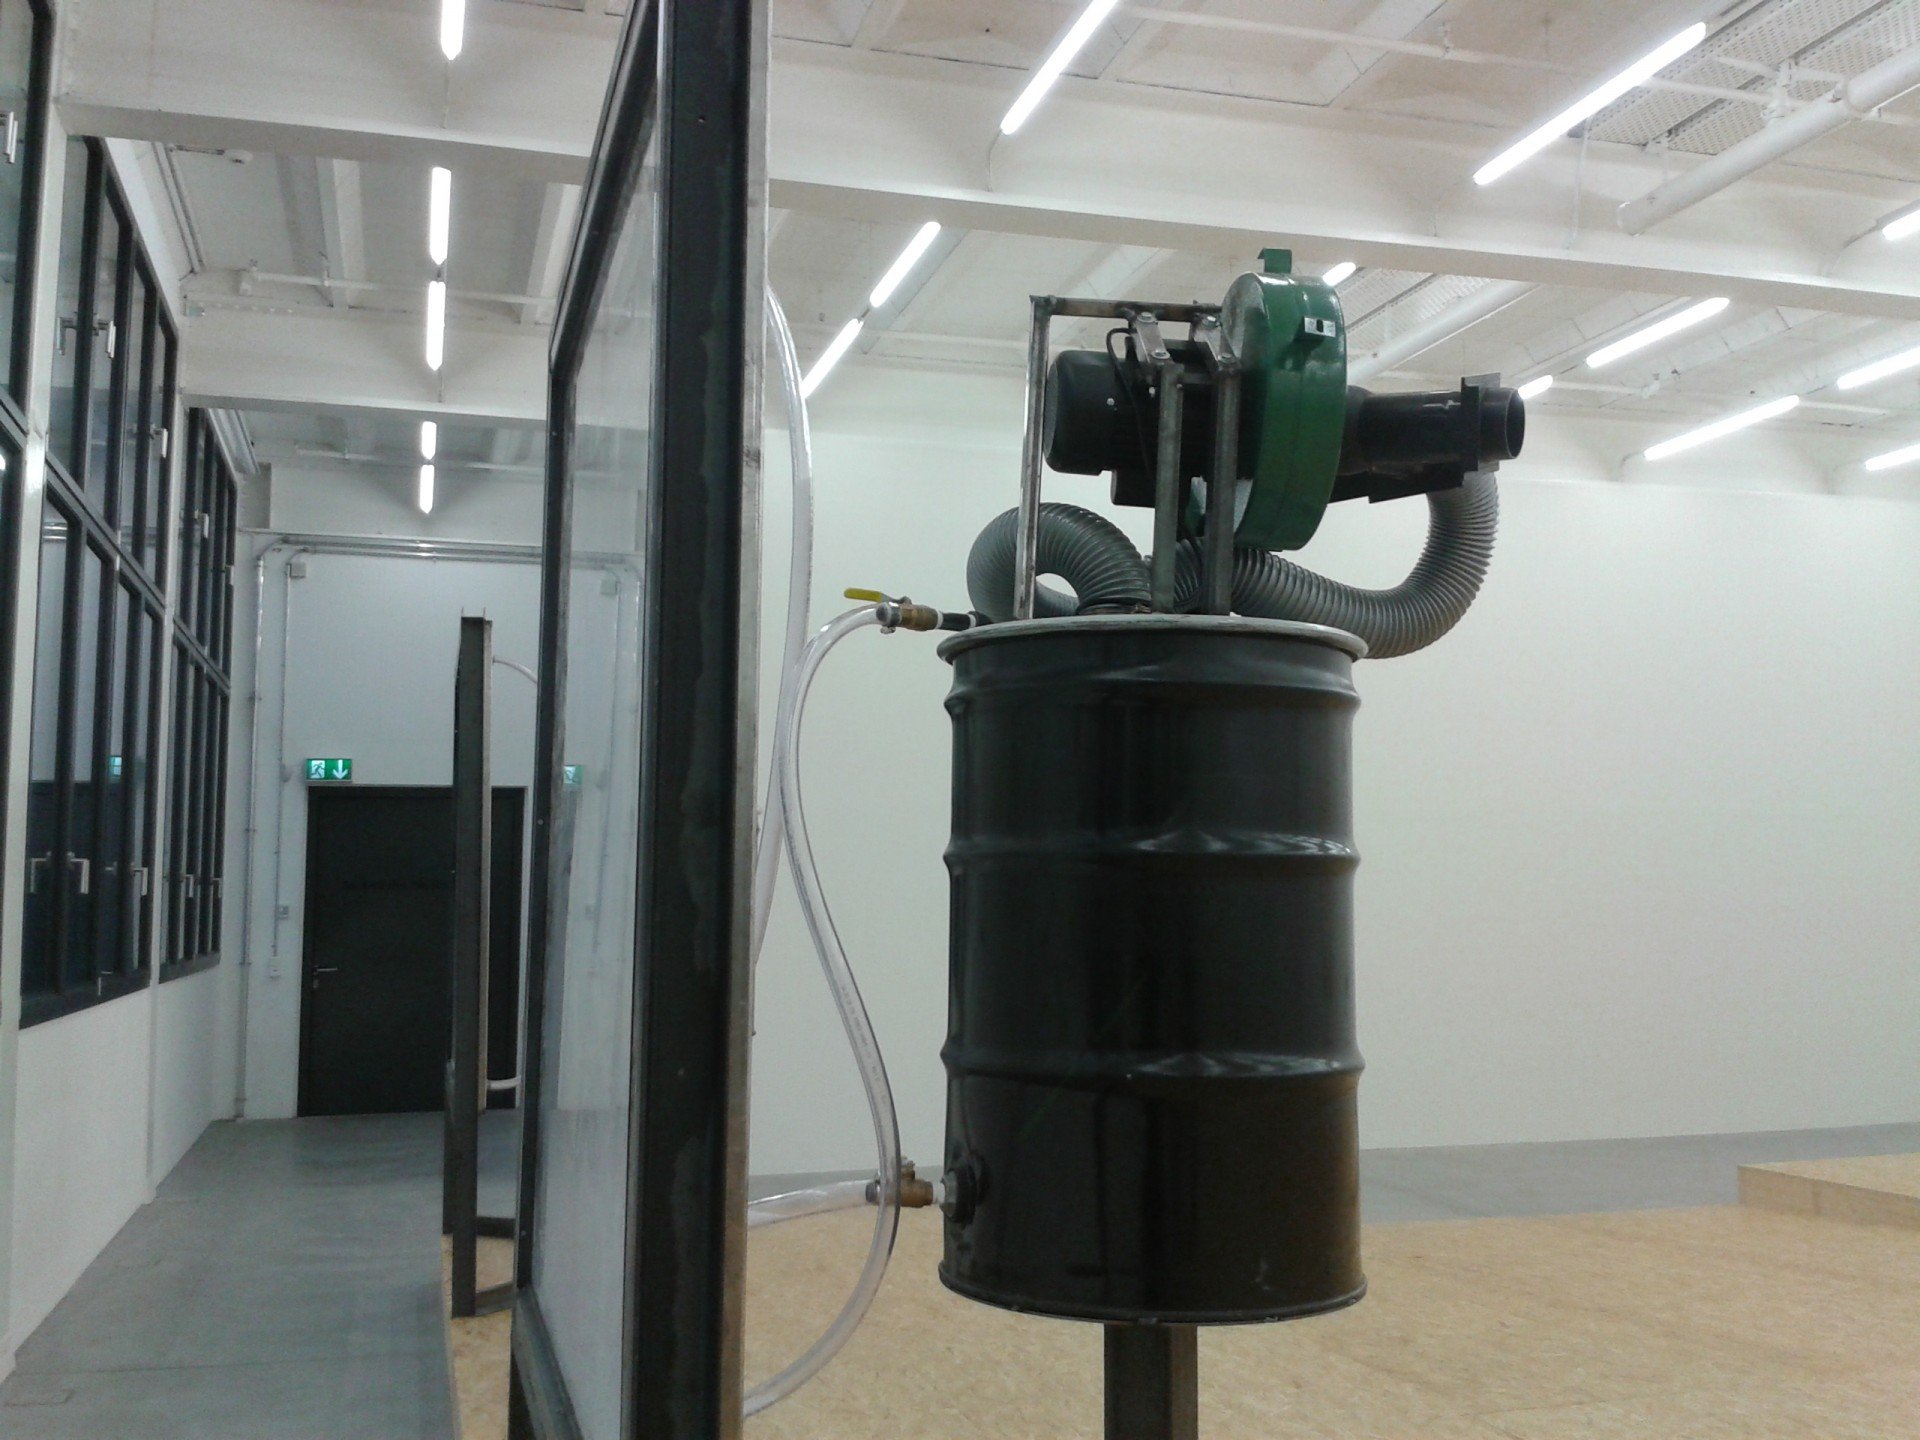 Oscar Tuazon, A home, 2014, installation view, Galerie Eva Presehuber, Zurich.